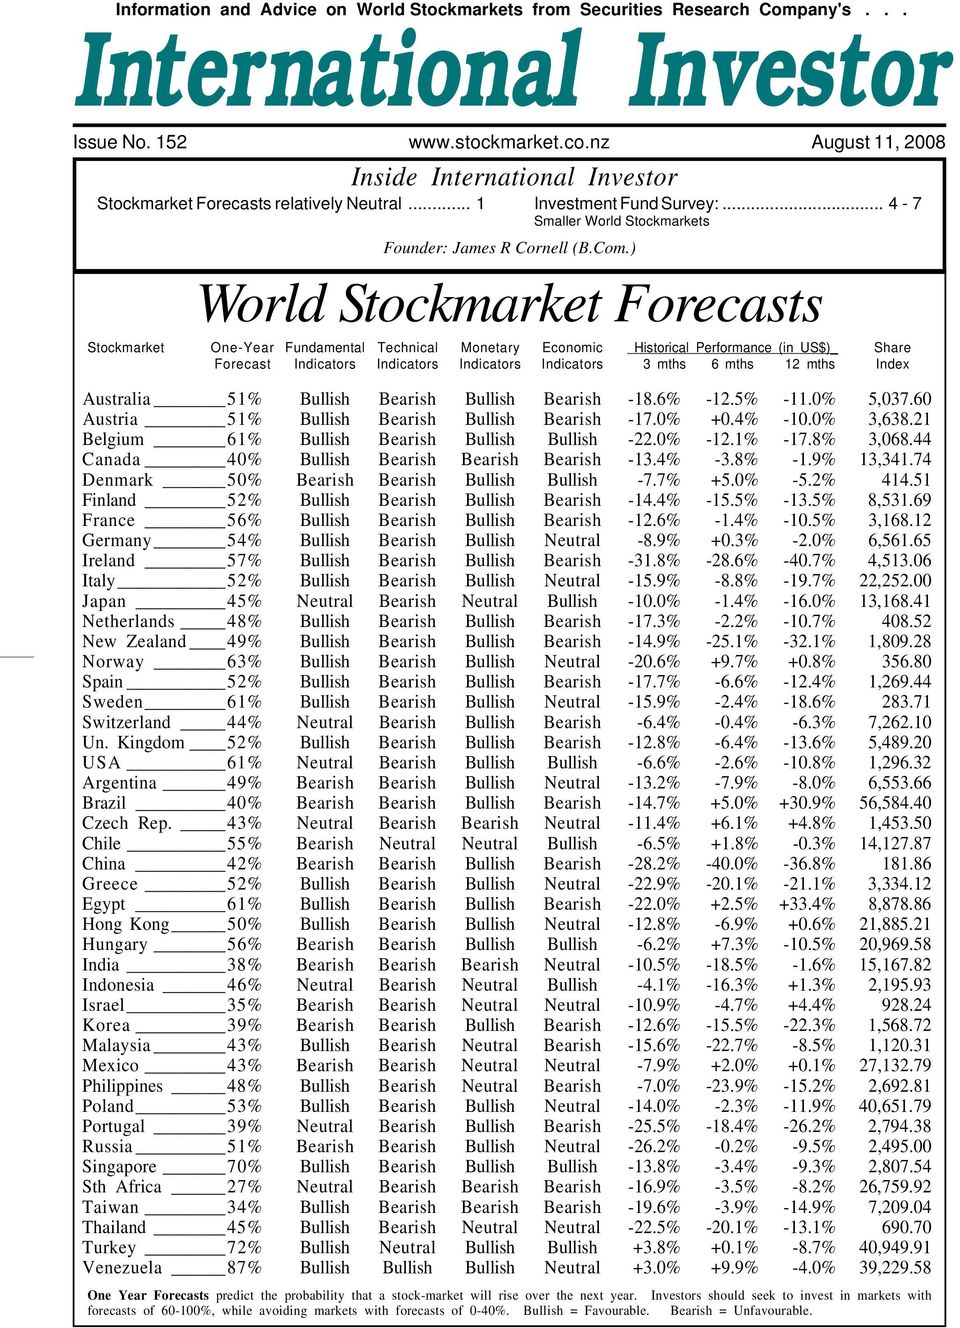 .. 4-7 Smaller World Stockmarkets World Stockmarket Forecasts Stockmarket One-Year Fundamental Technical Monetary Economic Historical Performance (in US$)_ Share Forecast Indicators Indicators